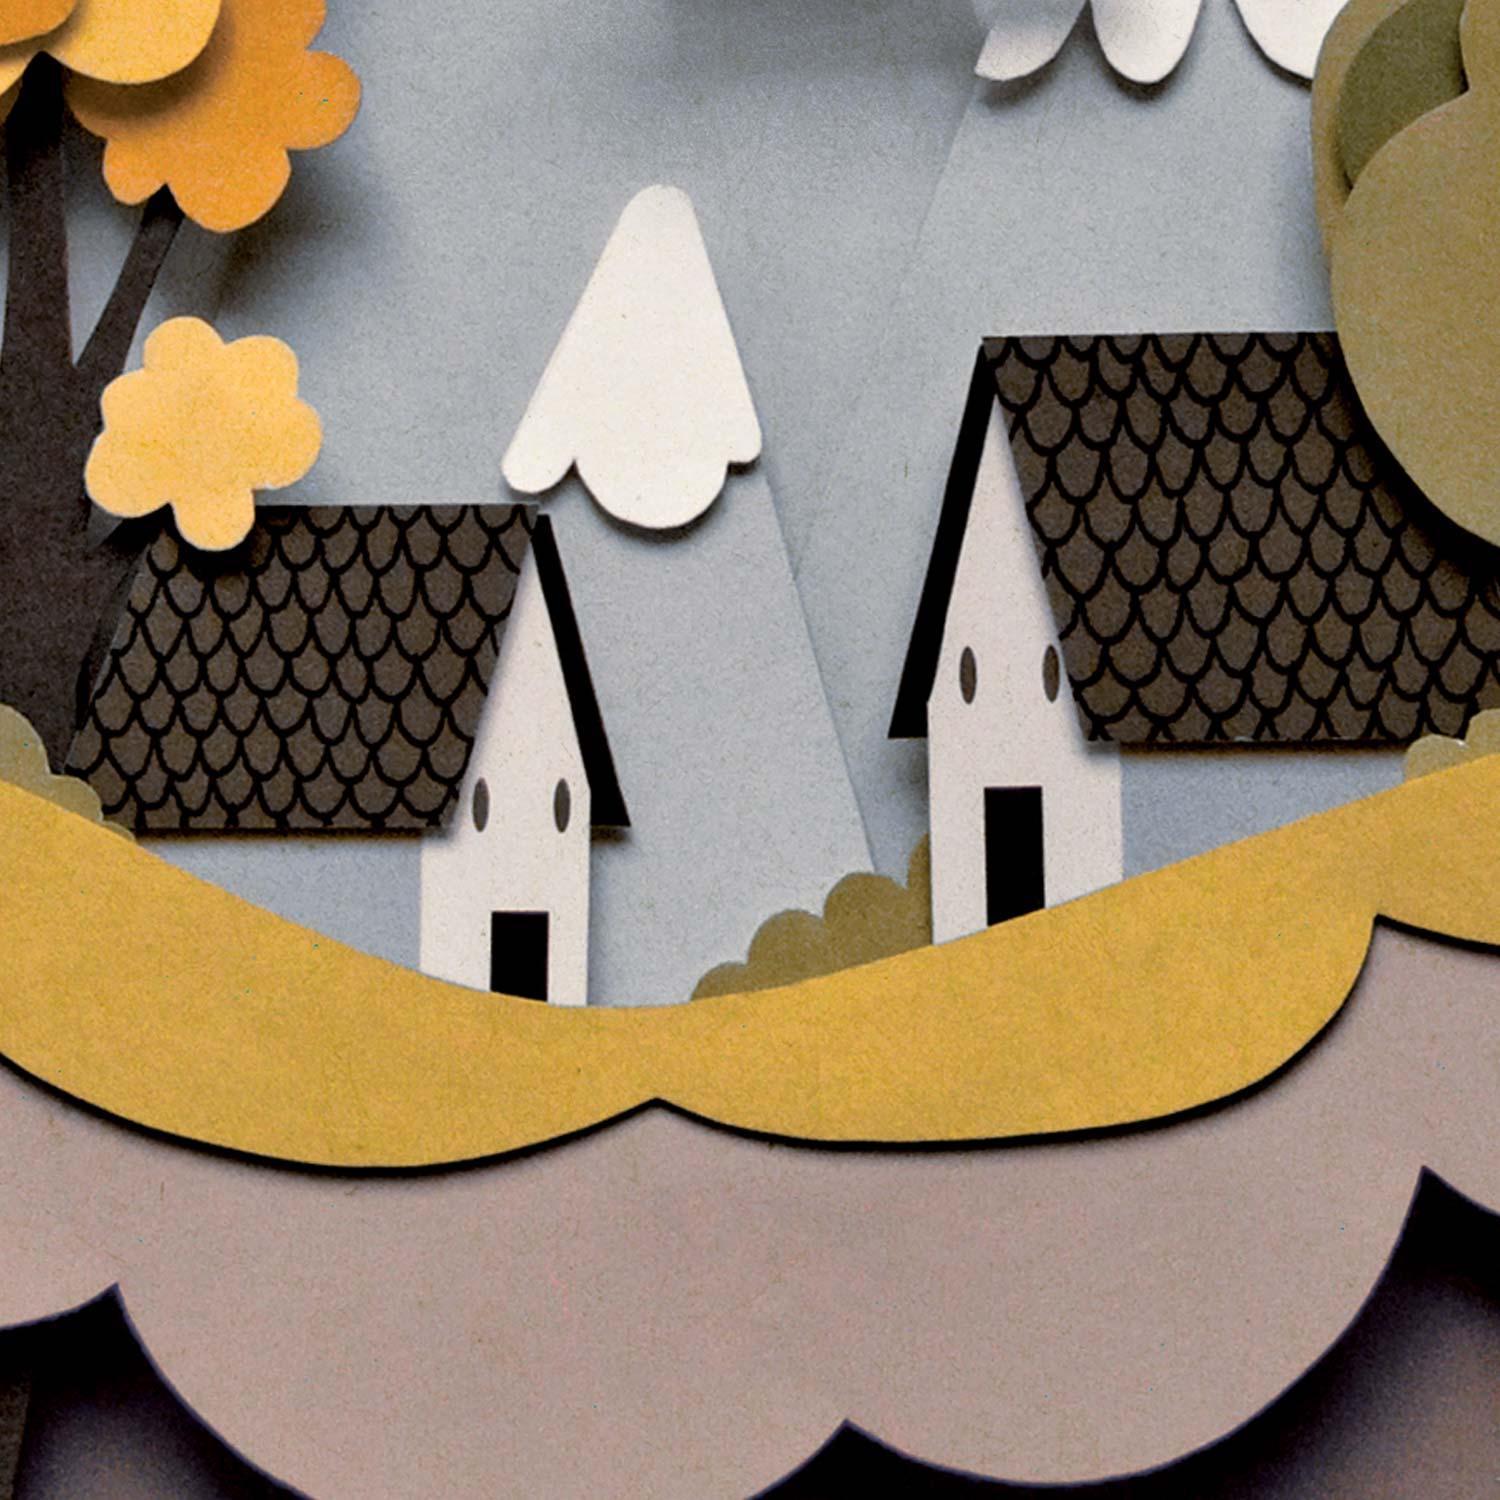 Papercut illustration. Paper art. Cut out illustration. Collage. Home illustrations. Trees illustration. Paper diorama.